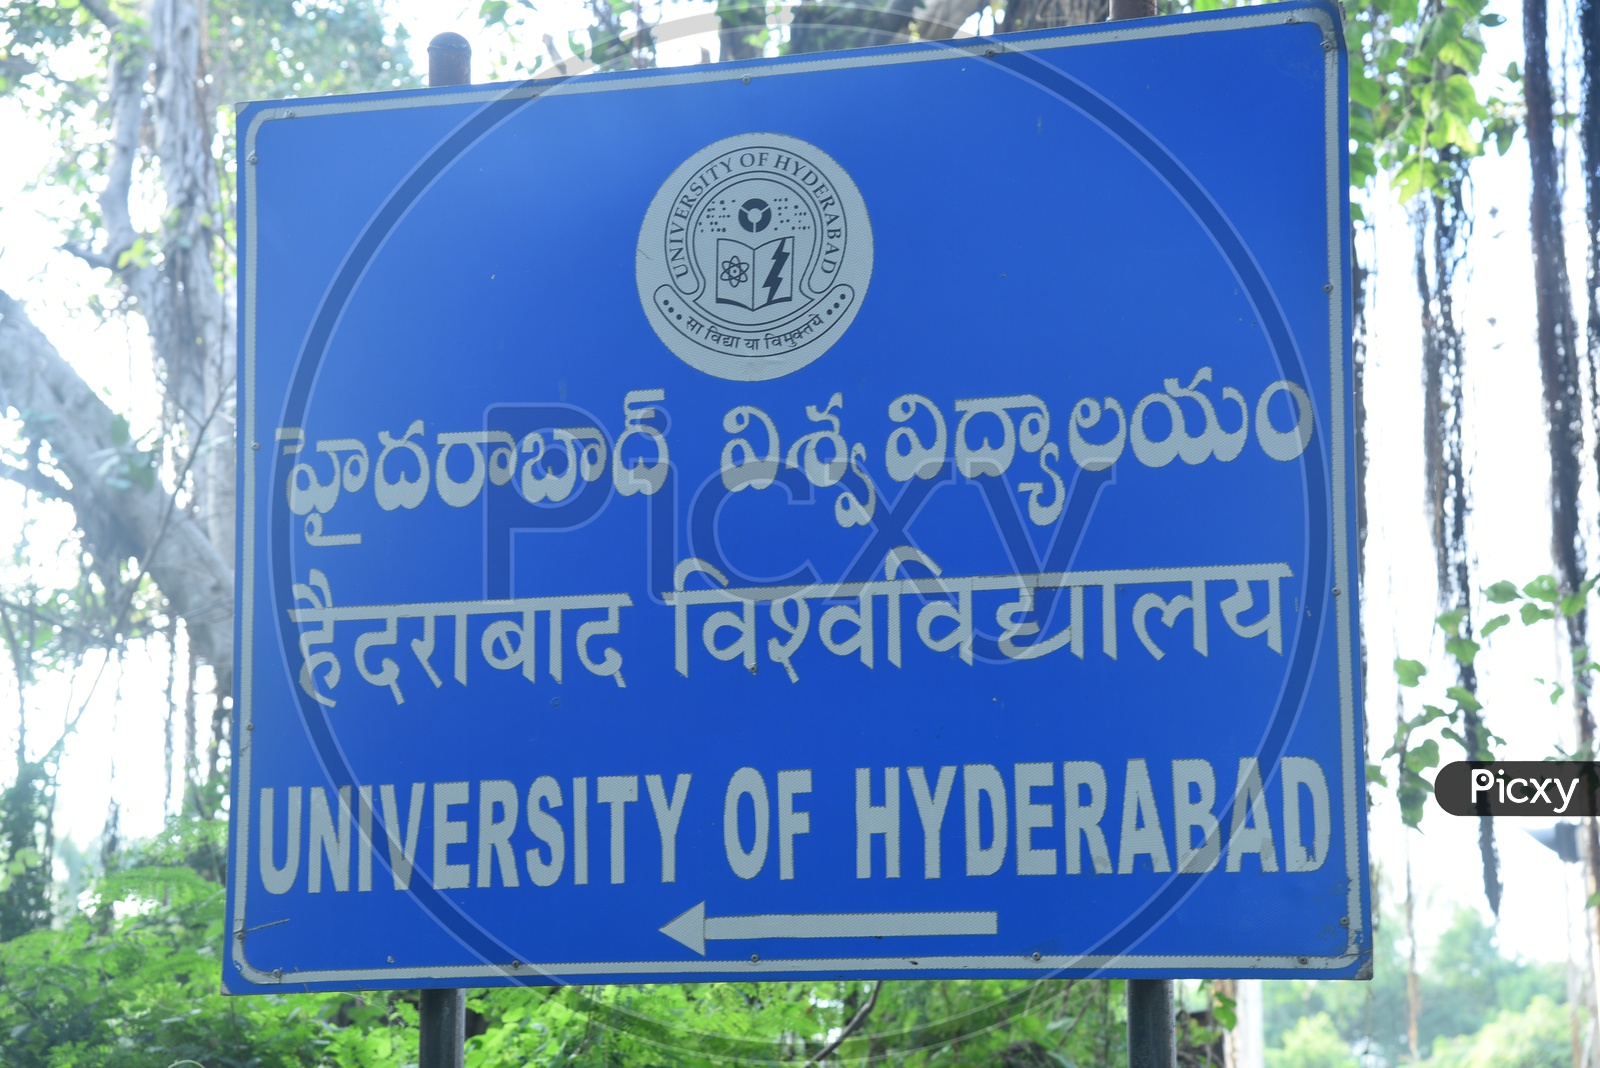 University Of Hyderabad Or Hyderabad Central University  Name Boards Inside University College